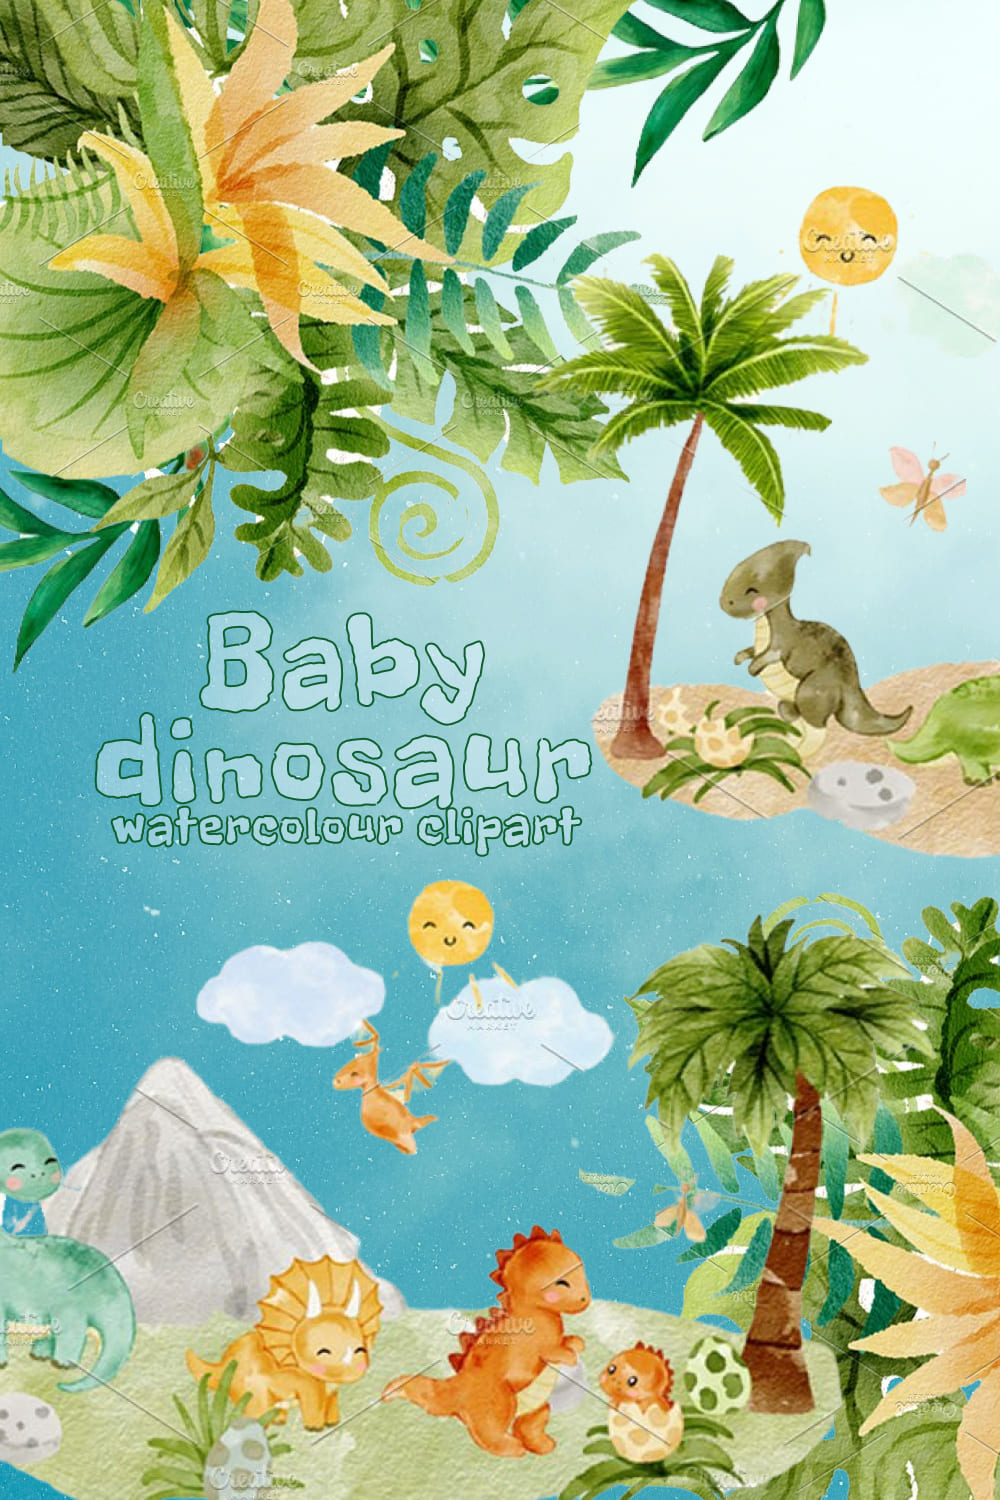 Baby Dinosaur Watercolour Clipart pinterest image.